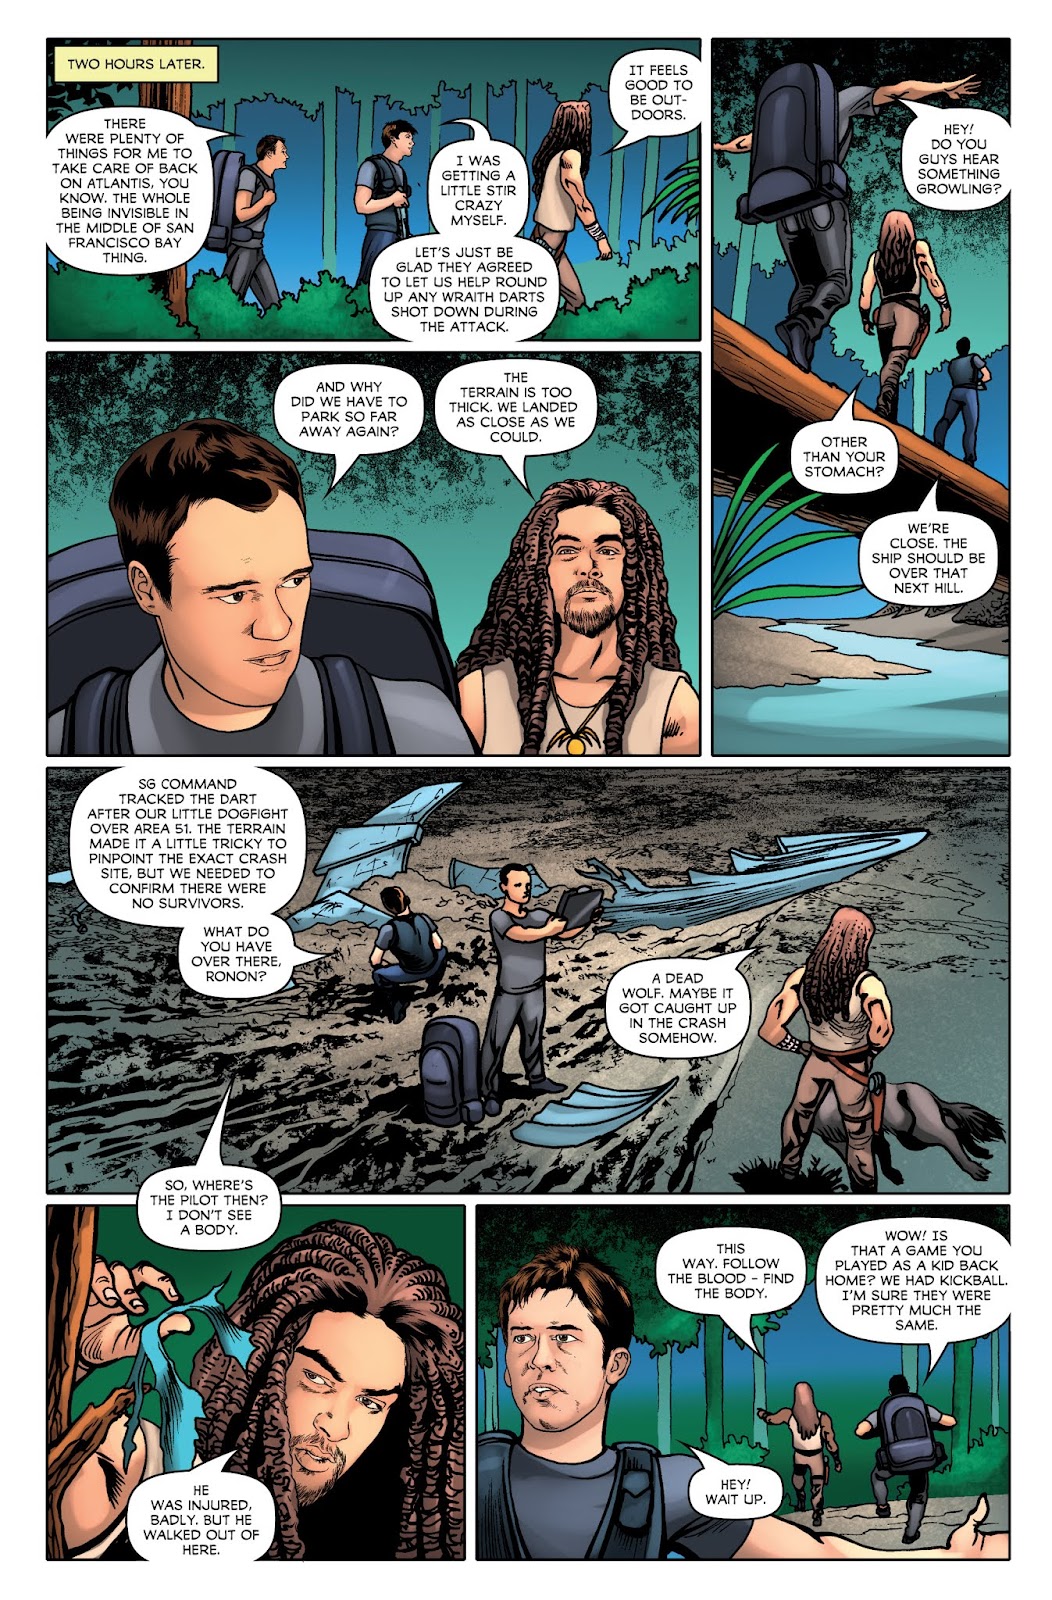 Stargate Atlantis/Stargate issue 2 - Page 15